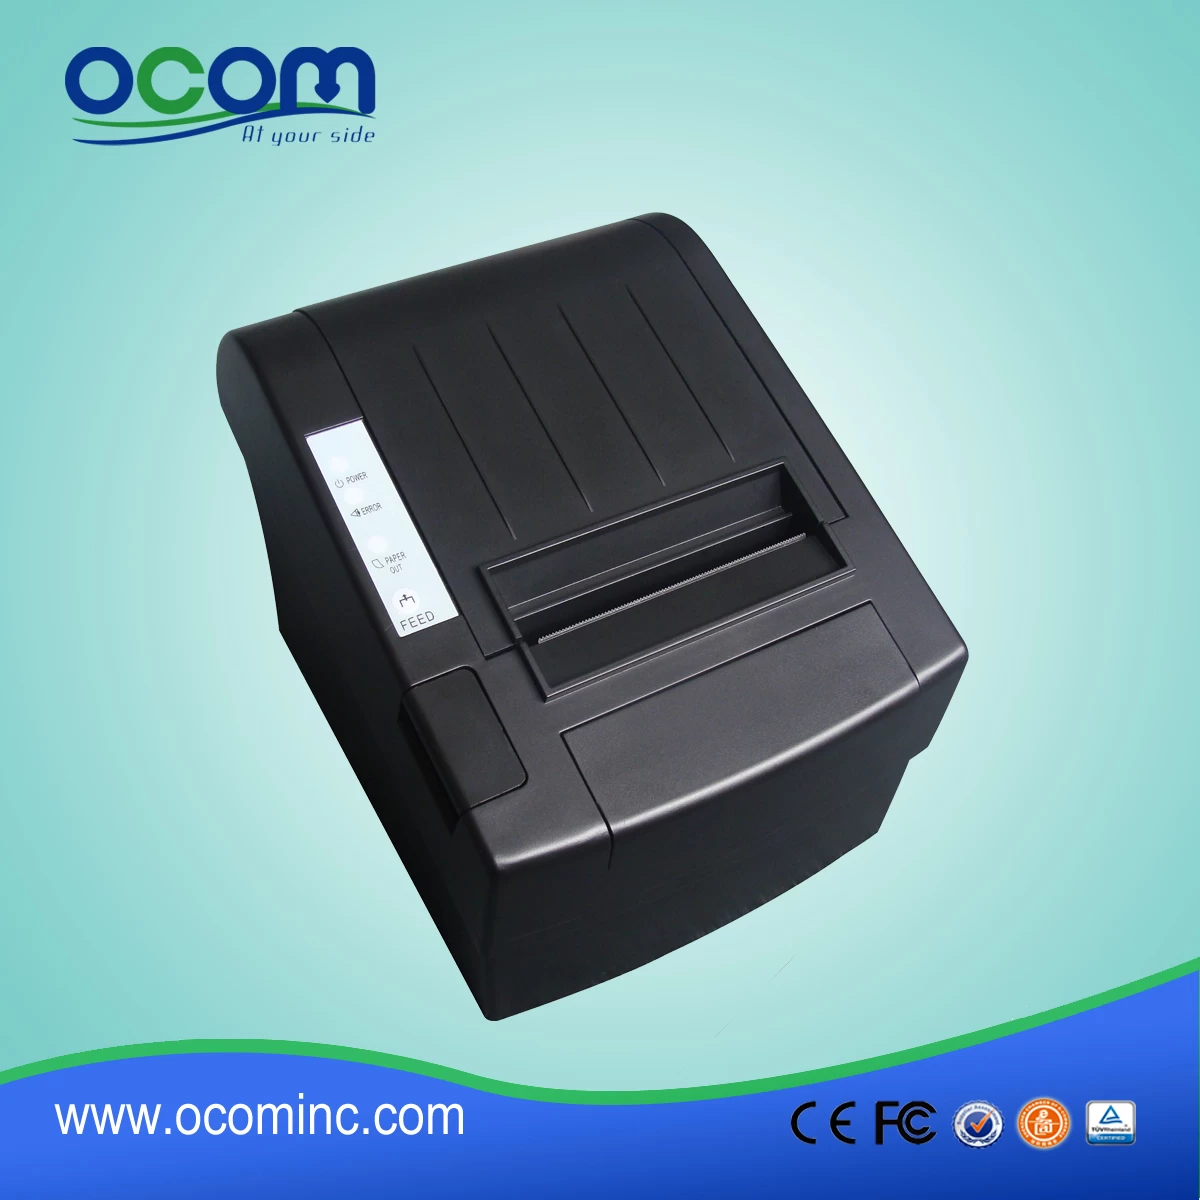 OCPP-806-URL: 300mm/sec High Printing Speed 3 Interfaces 80mm Thermal Receipt Printer